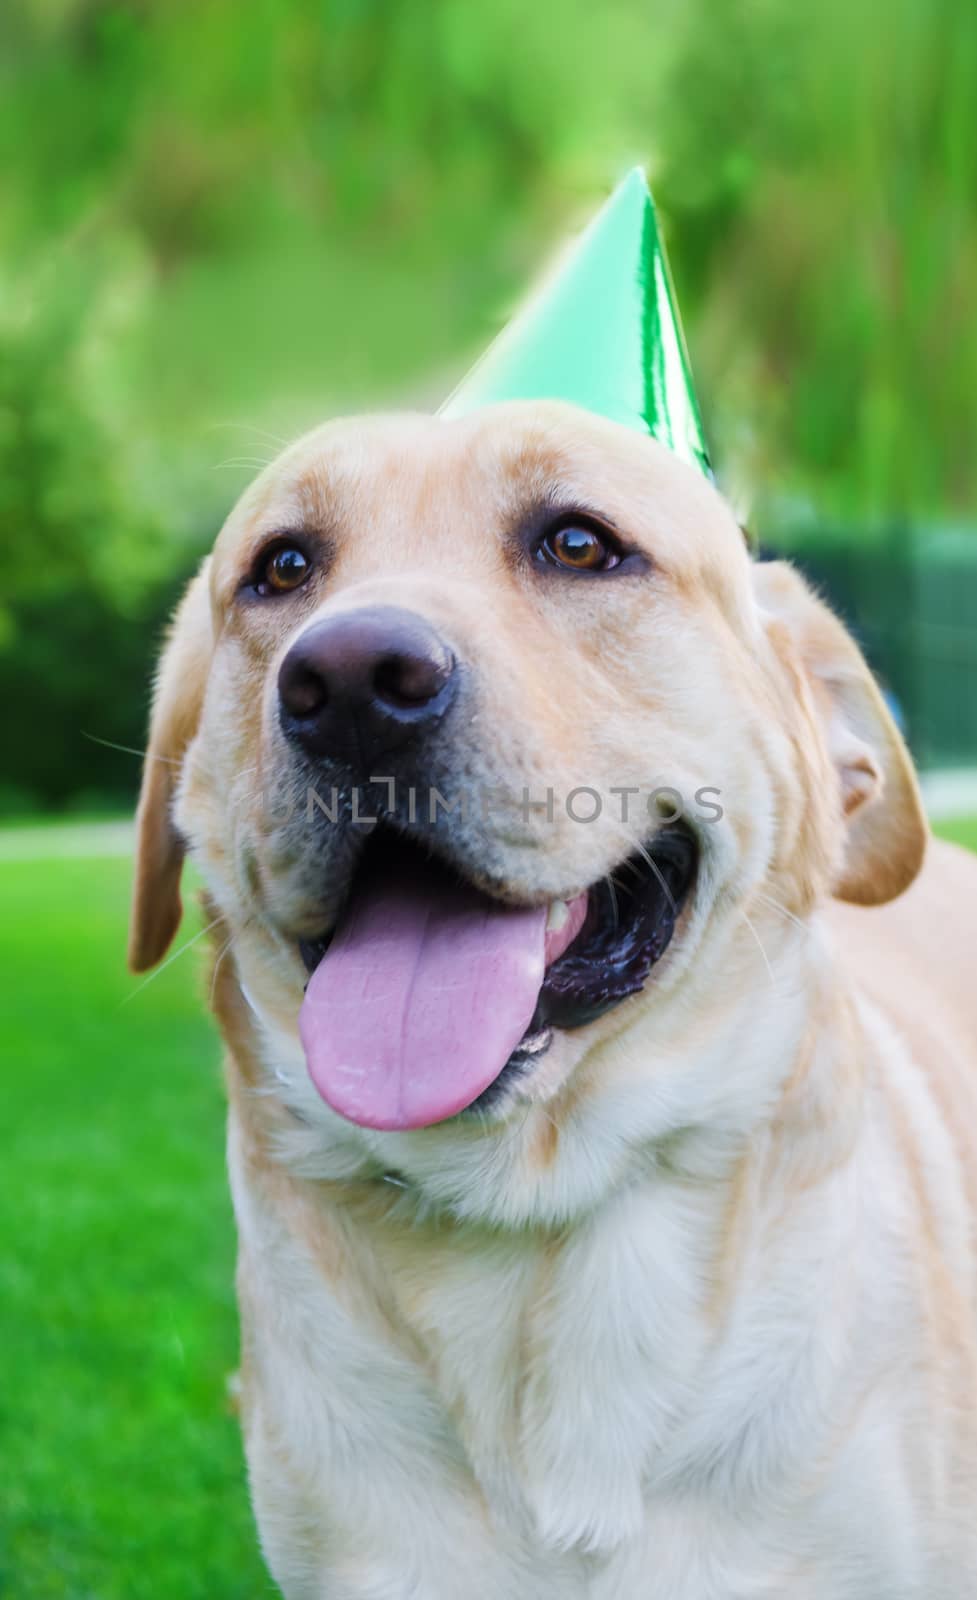 Labrador retriever with birthday hat by EllenSmile